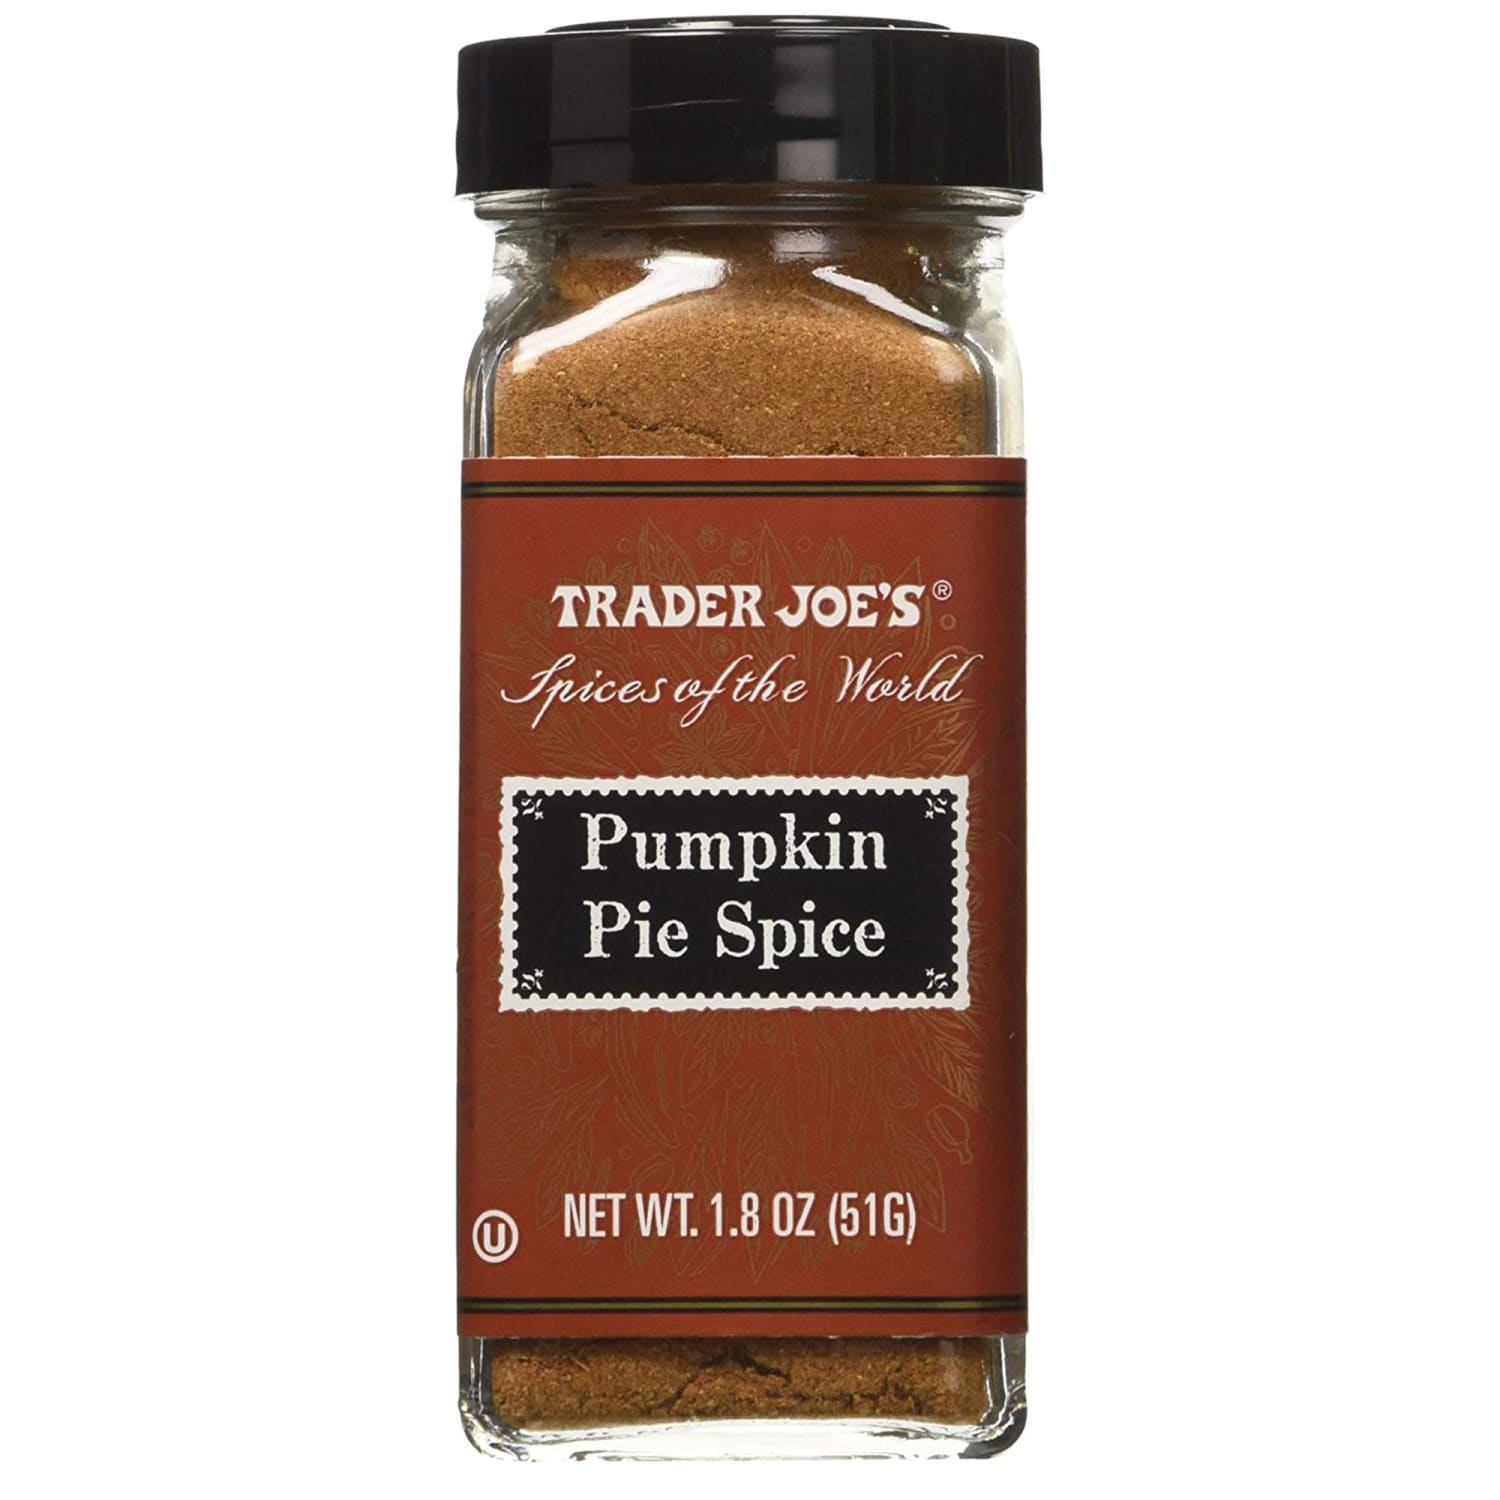 10 Trader Joe's spices and seasonings under $3